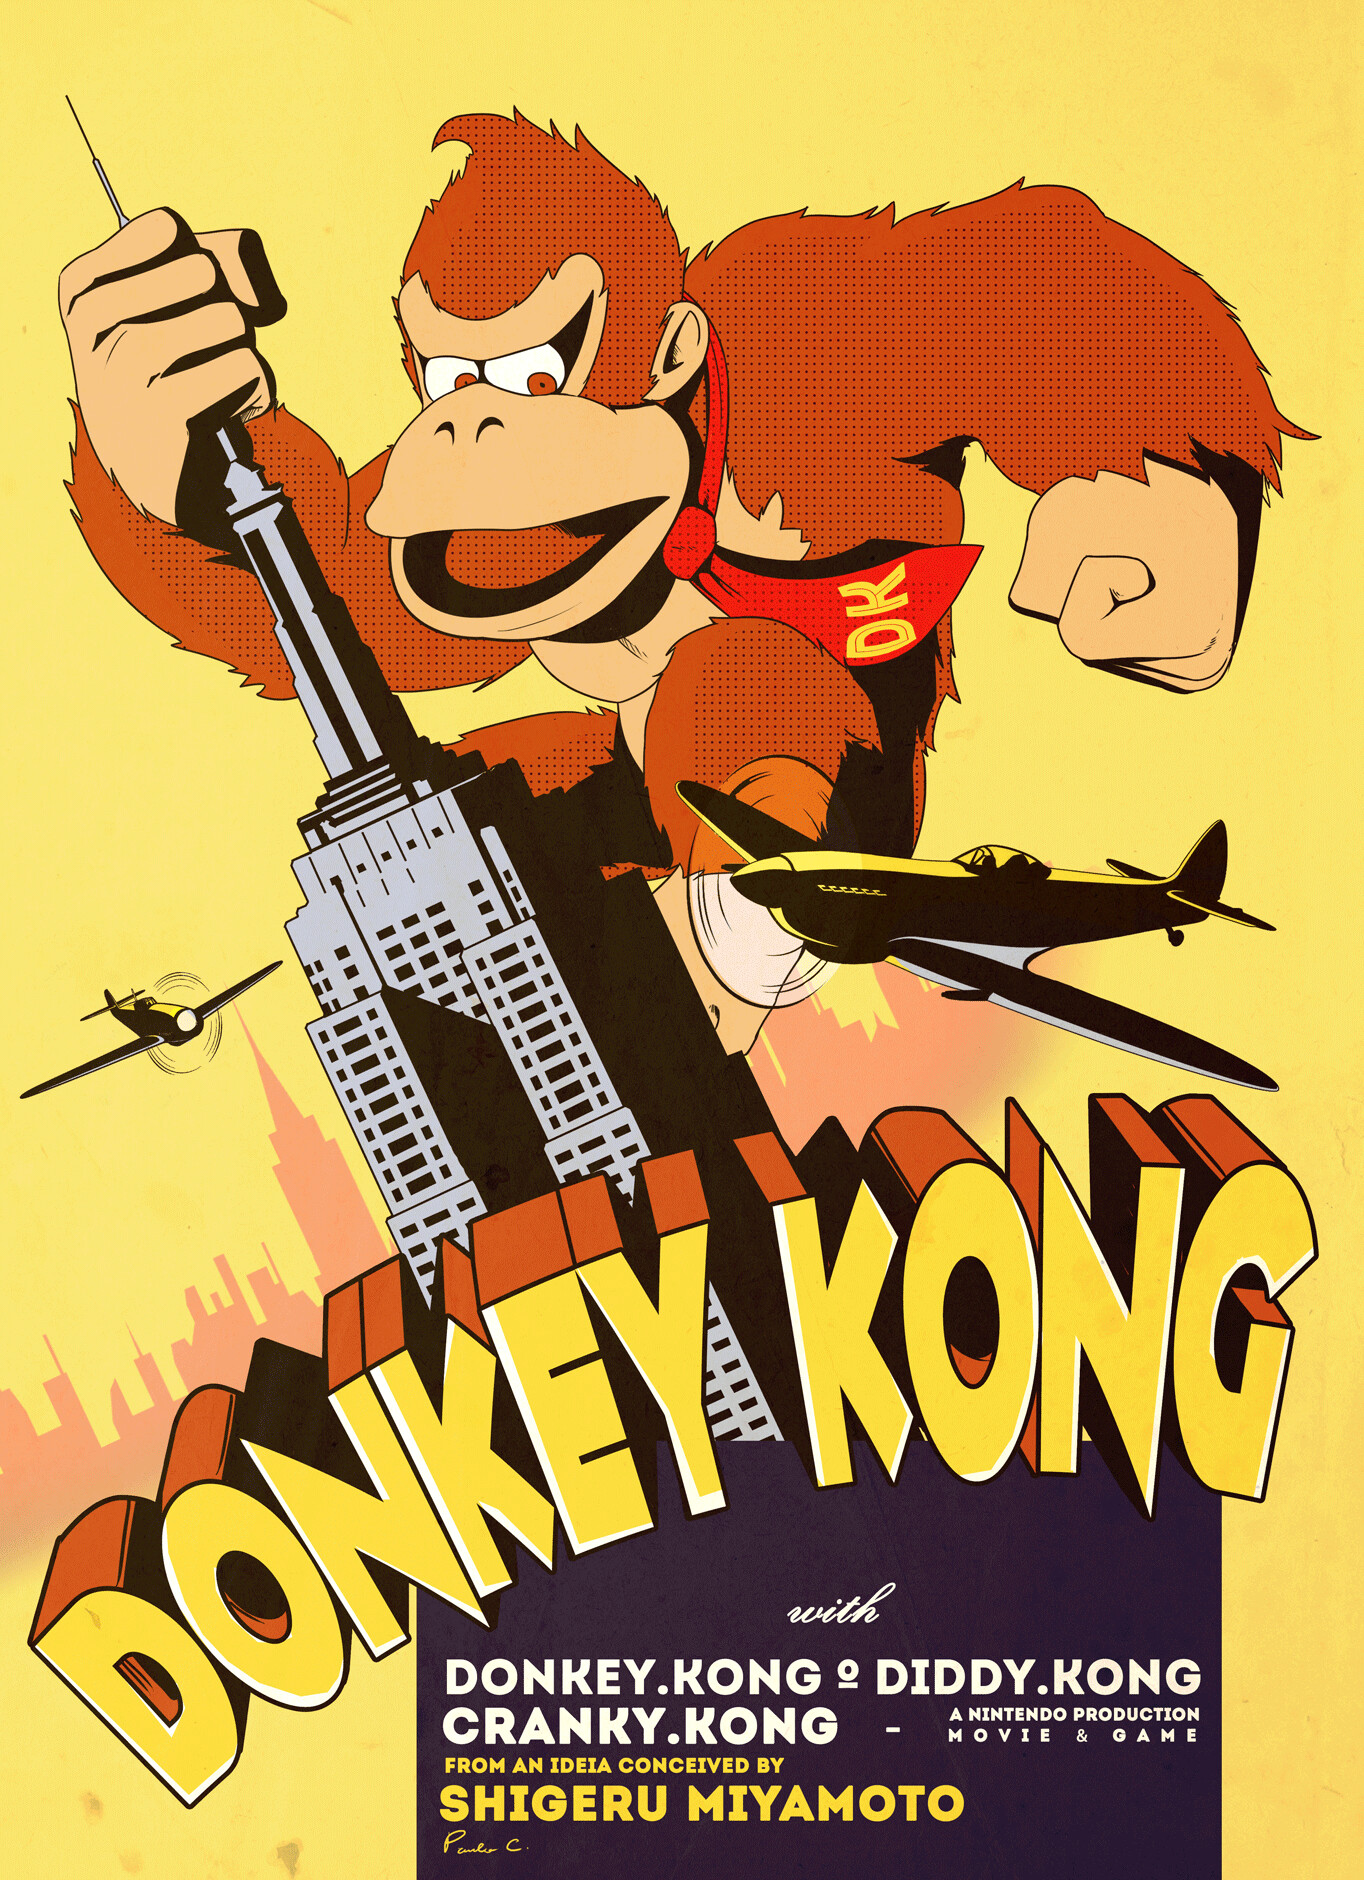 Artstation - Poster - Donkey Kong Paulo Brancher